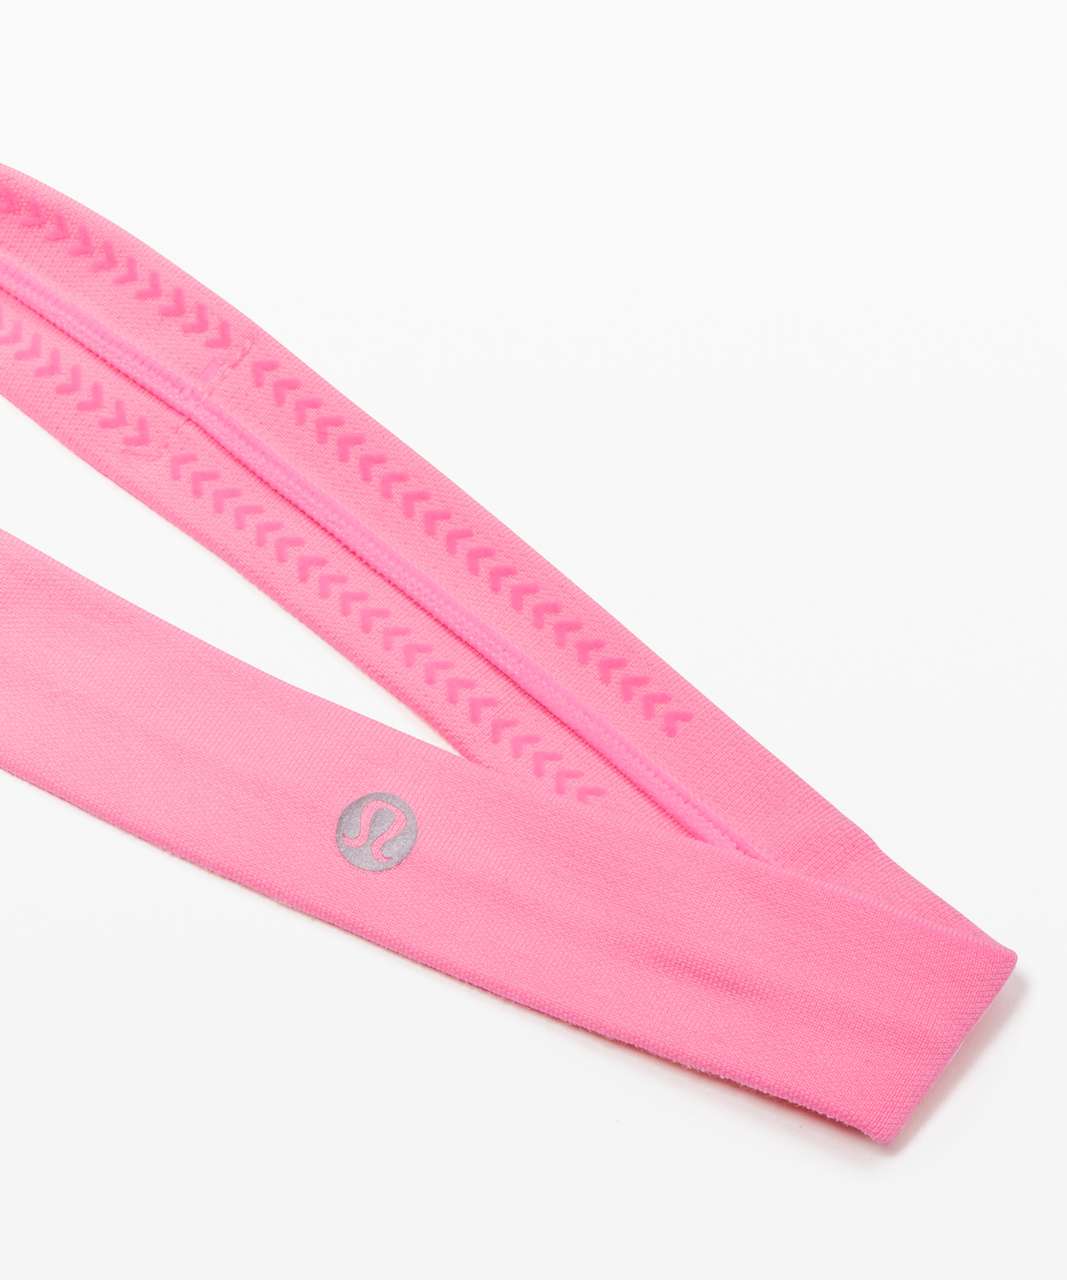 Lululemon Cardio Cross Trainer Headband - Pink Shell / Pink Shell